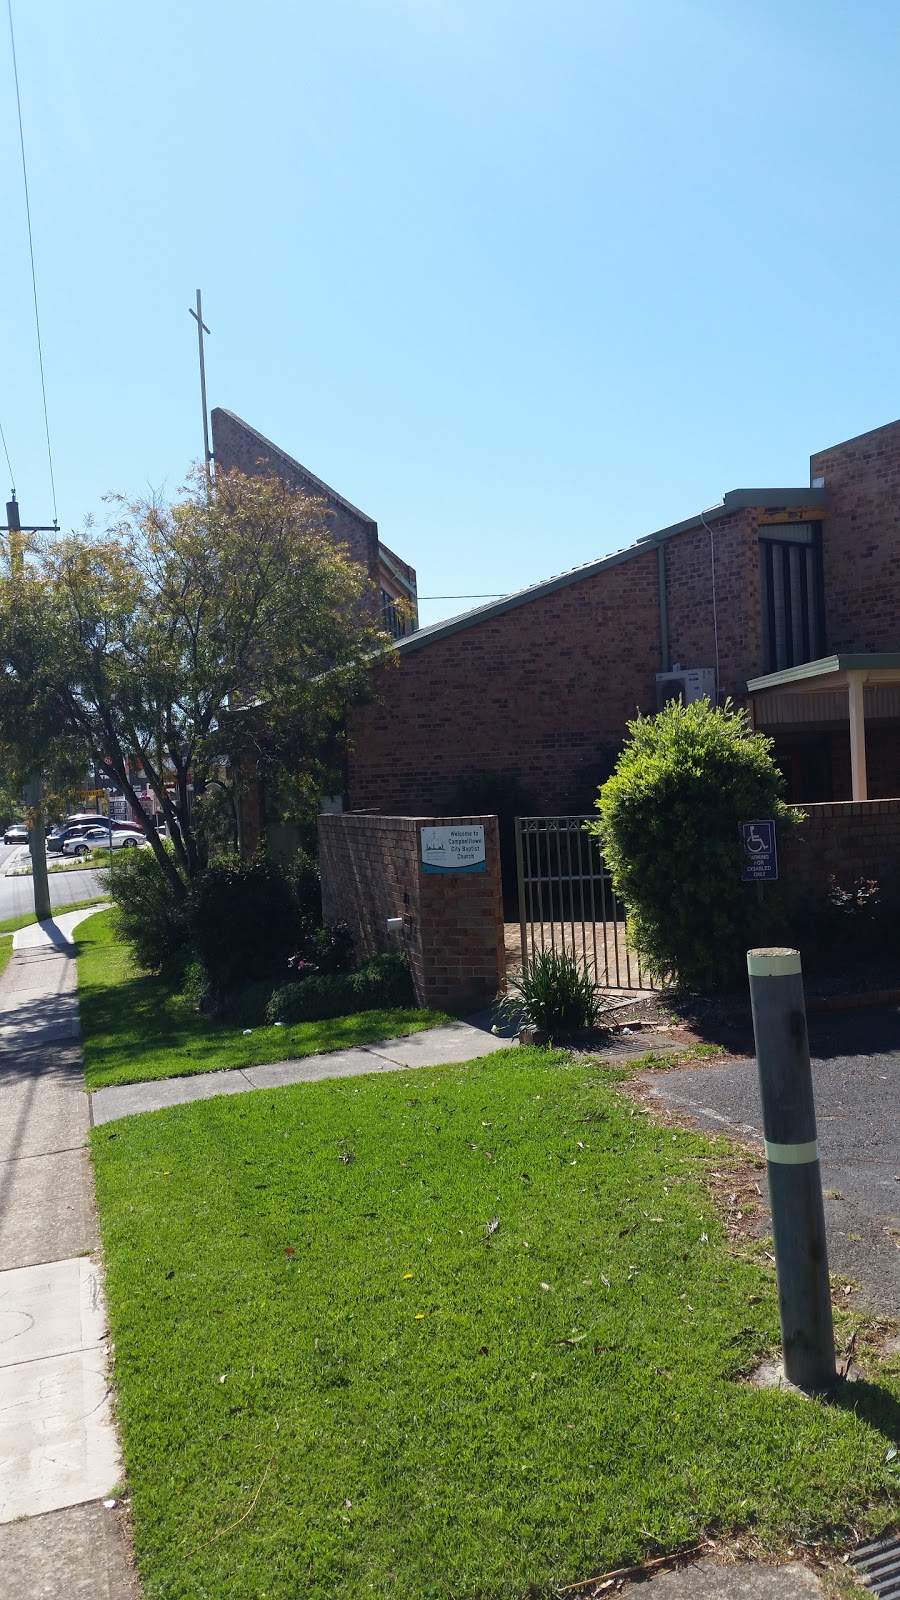 Campbelltown City Baptist Church | church | Cnr Lindesay & Chamberlain Sts, Campbelltown NSW 2560, Australia | 0246282844 OR +61 2 4628 2844